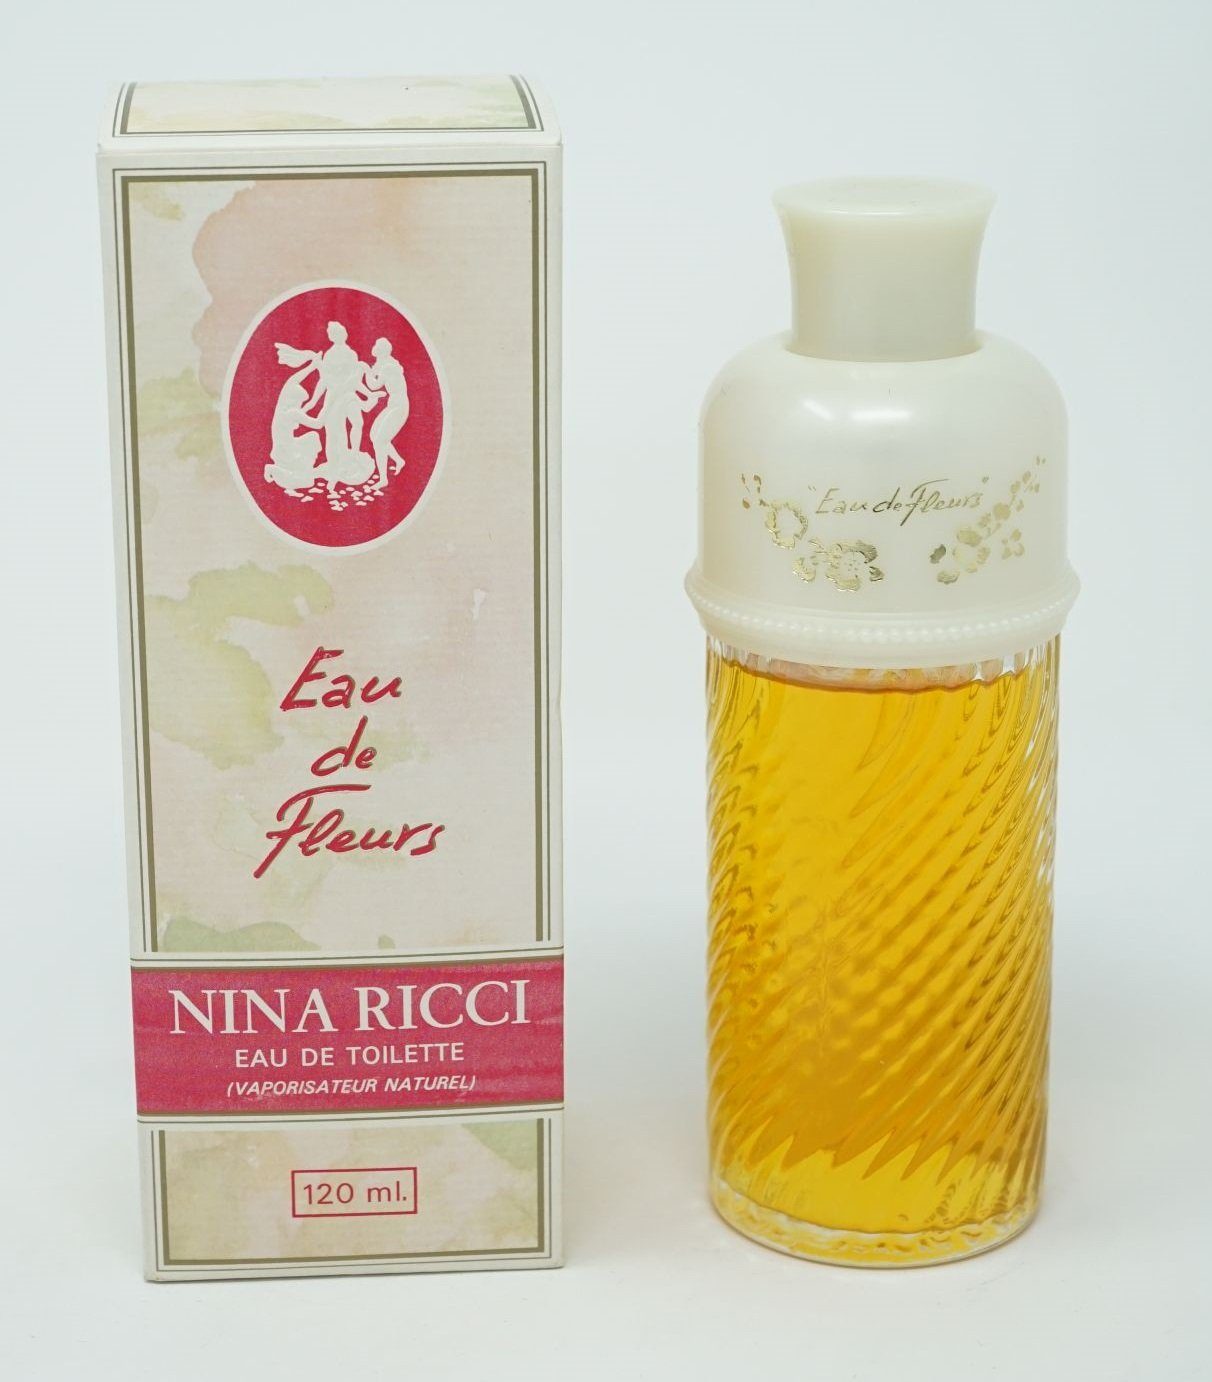 Nina Ricci Eau de Toilette Nina Ricci Eau de Fleurs Eau de Toilette spray 120ml